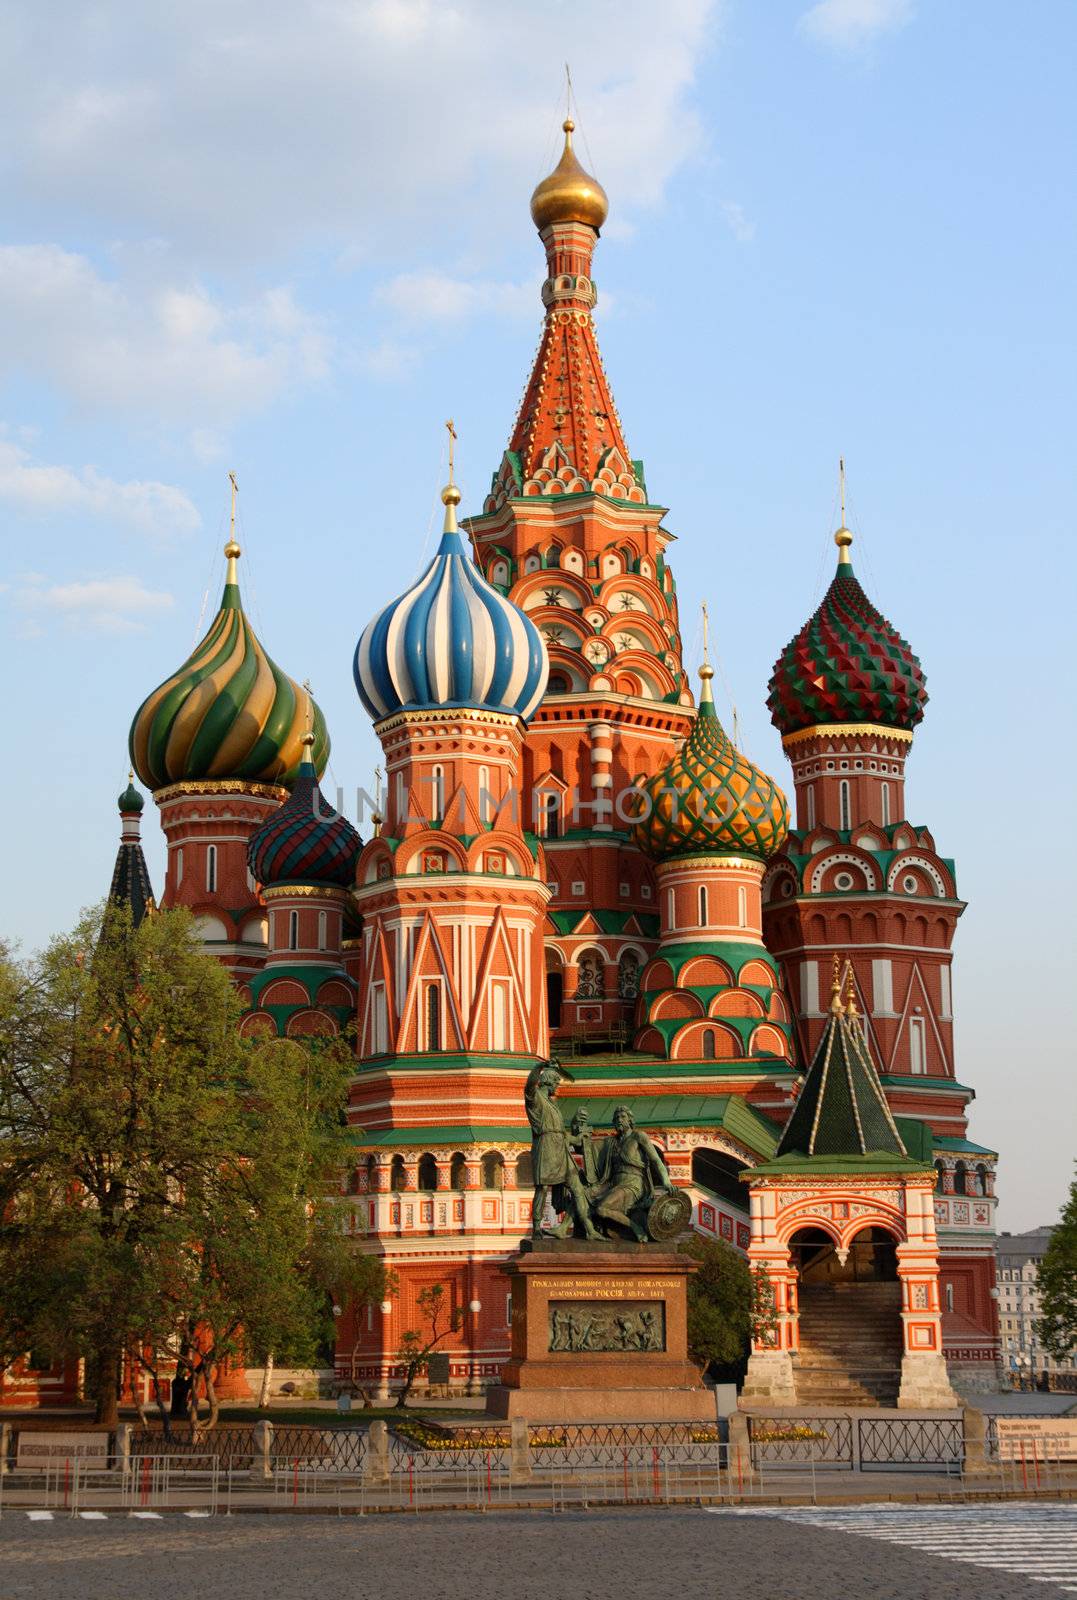 Vasiliy Blazhenniy church on red square in Moscow